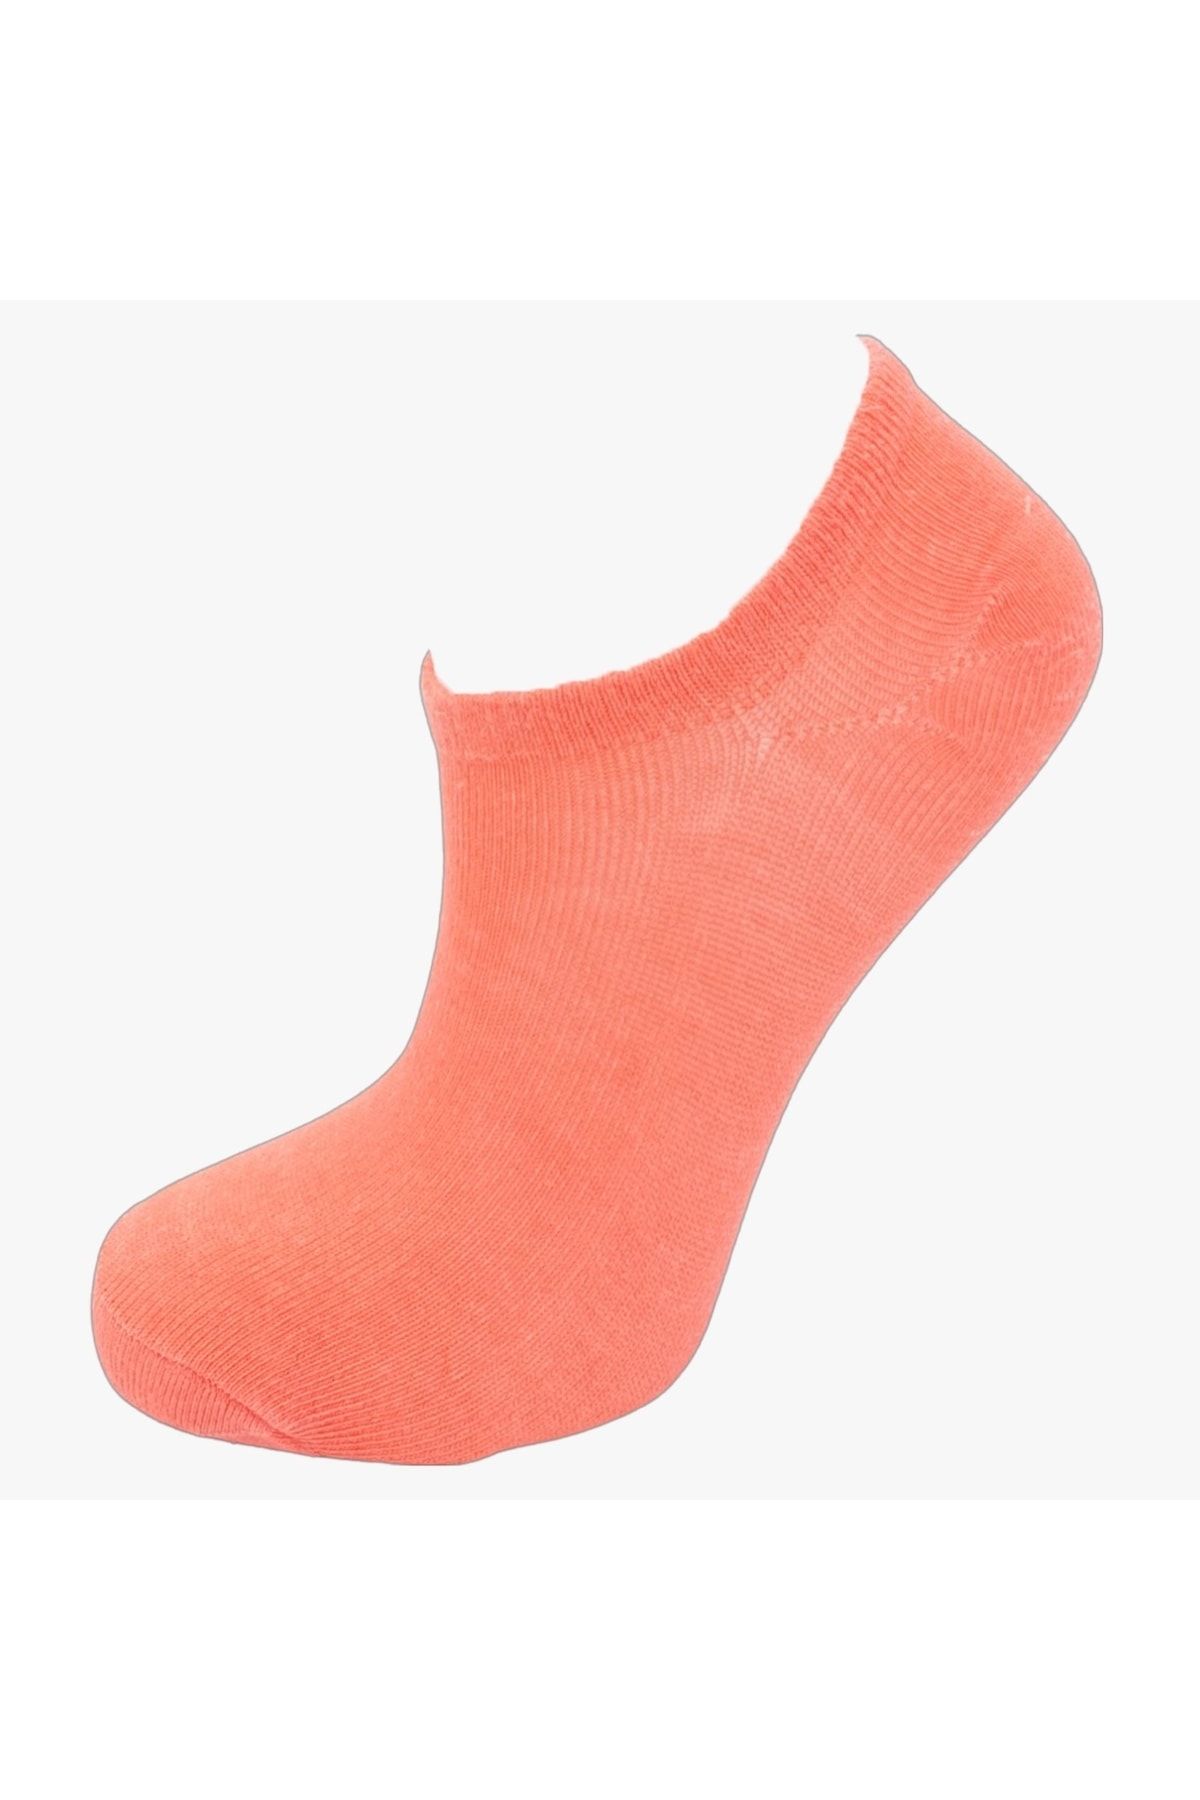 pazariz Pazari Patik Çorap 6 Lı